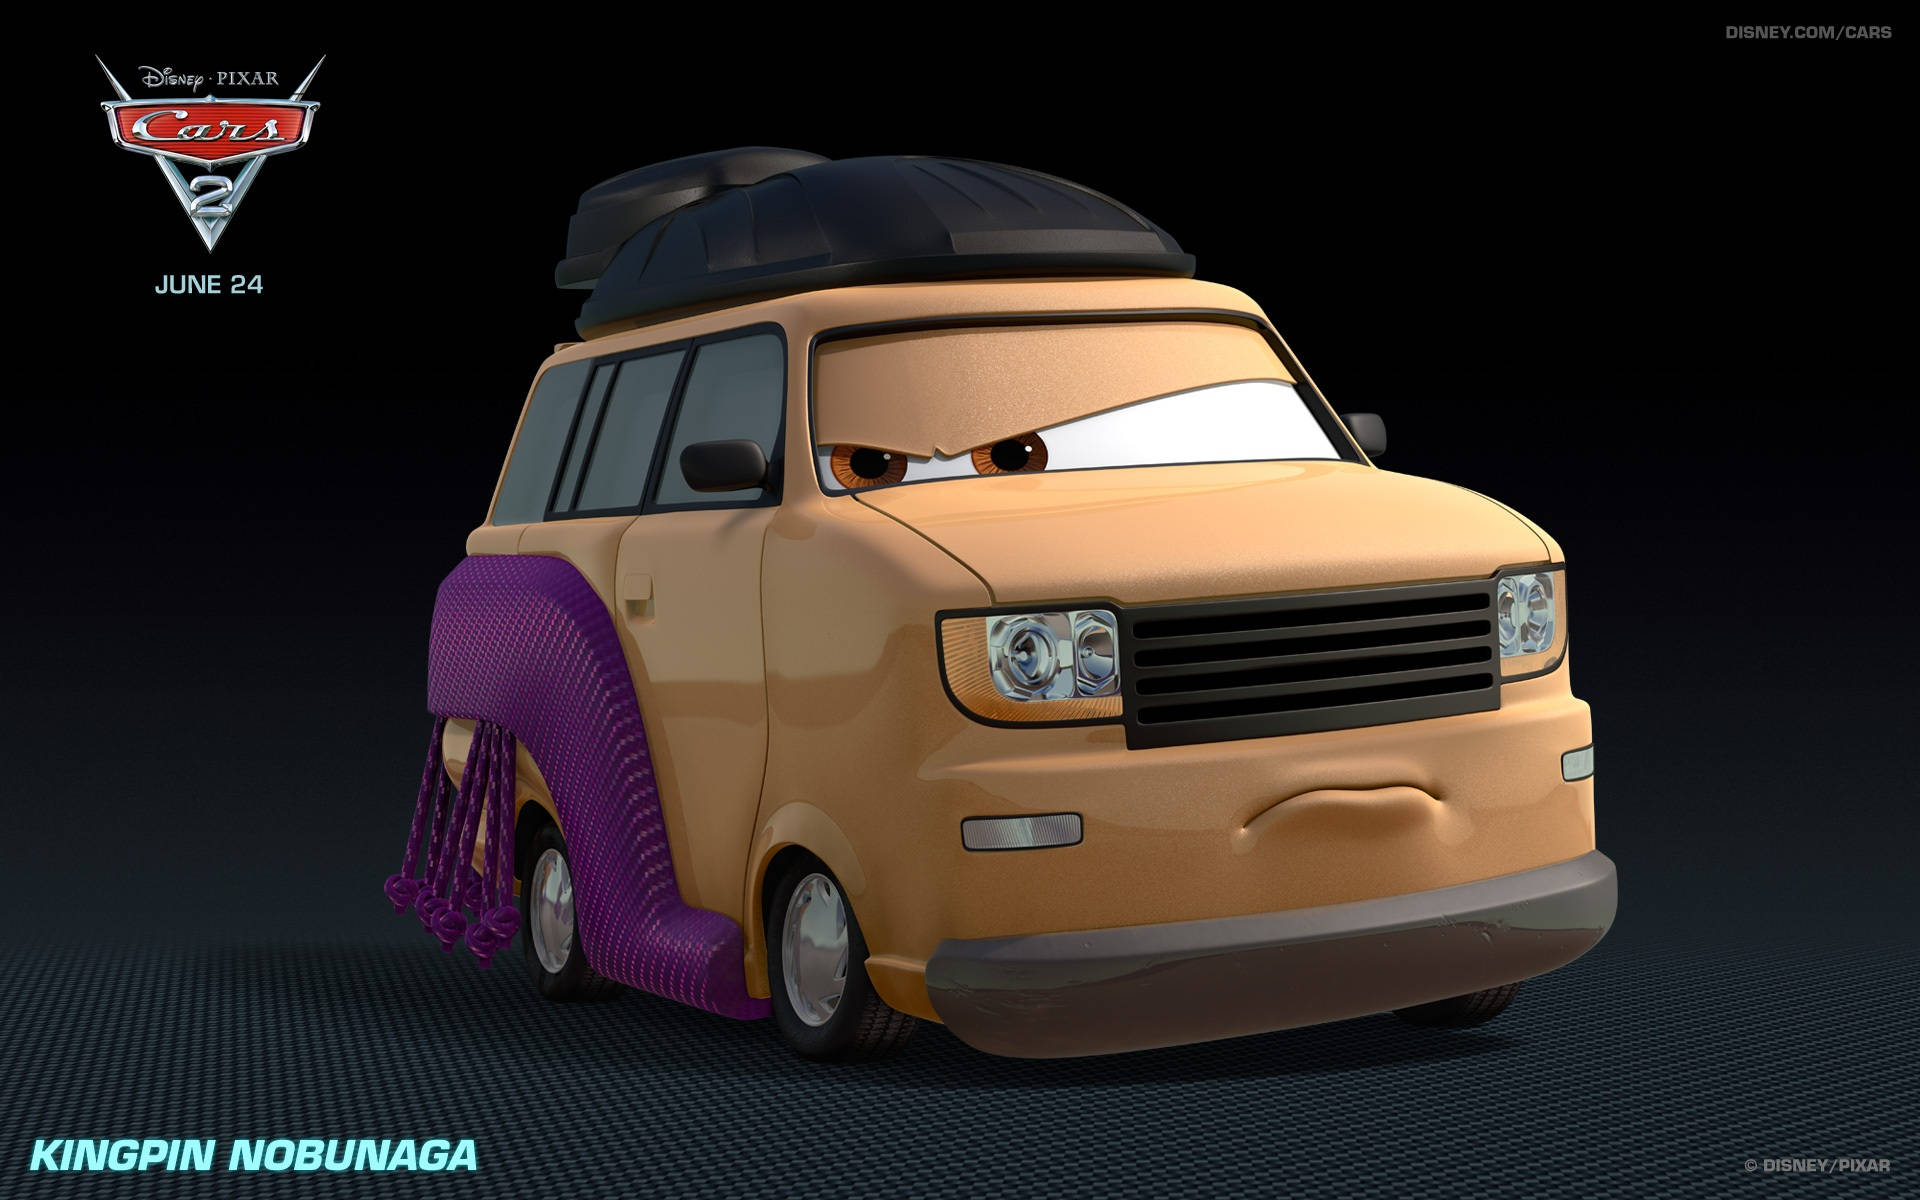 Disney Pixar Kingpin Nobunaga Cars 2 Wallpaper